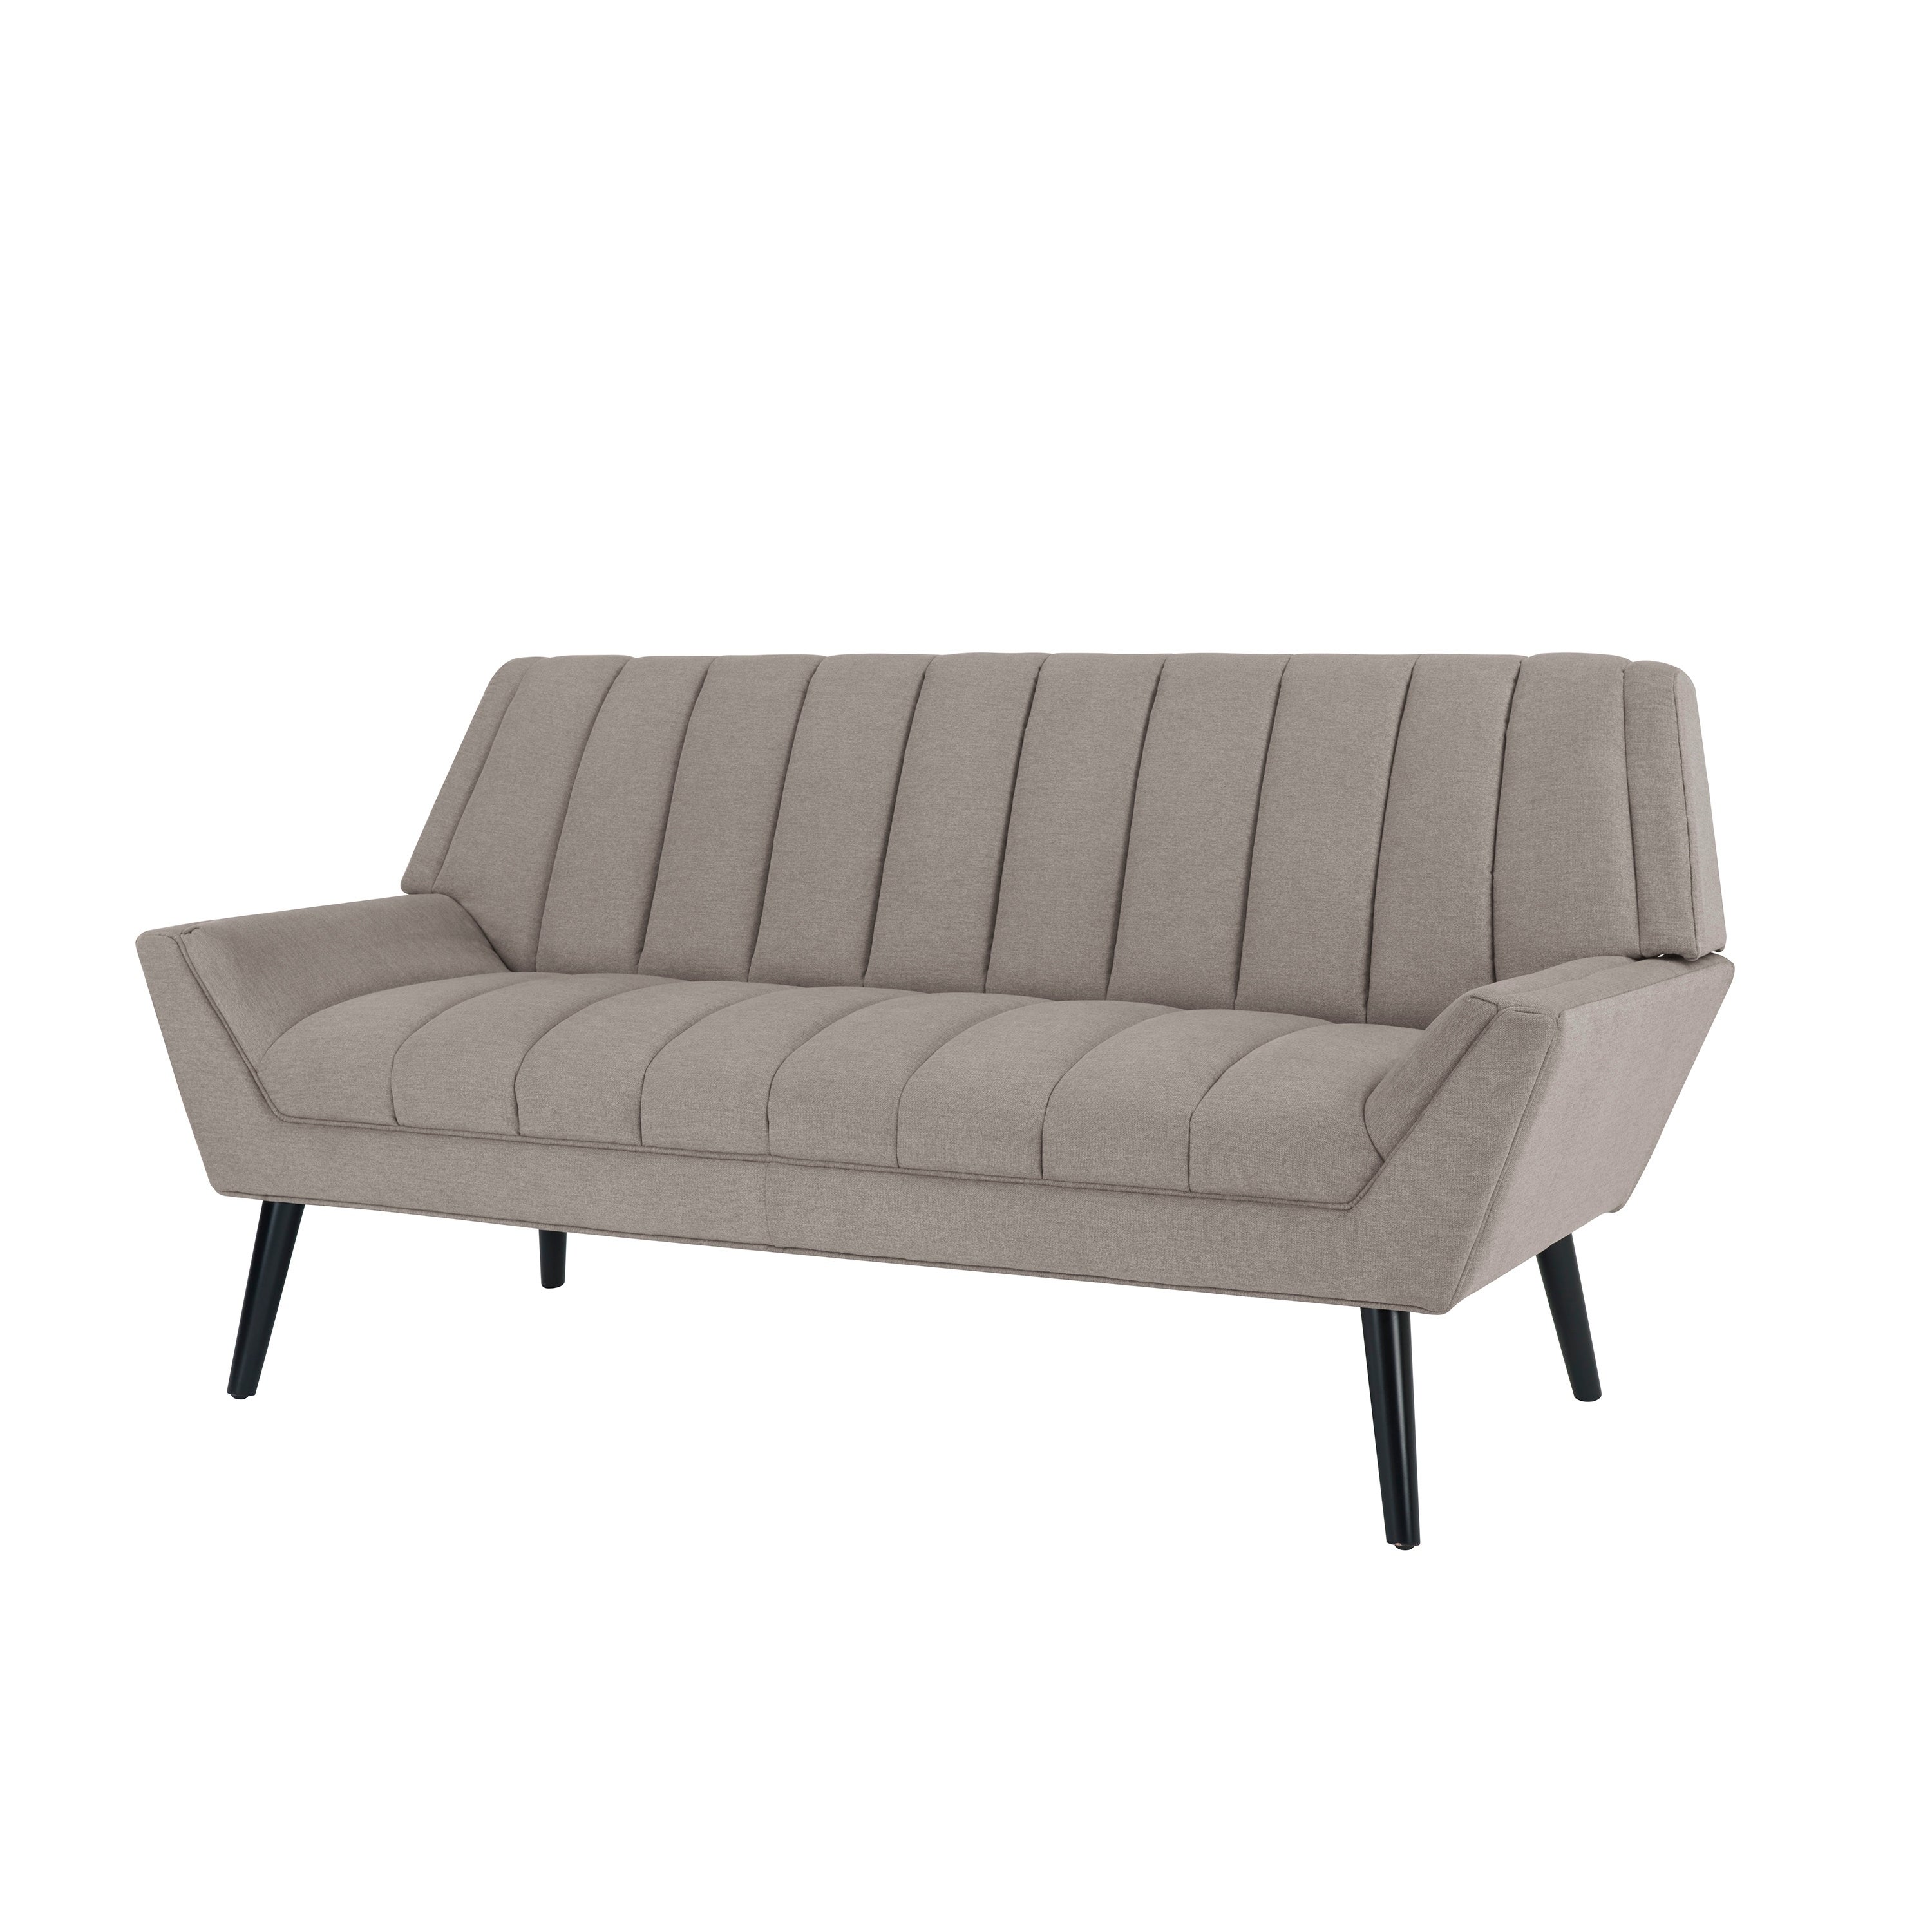 Green Sectional Sofa $150 - $205 by Kingbird Furniture Company 7